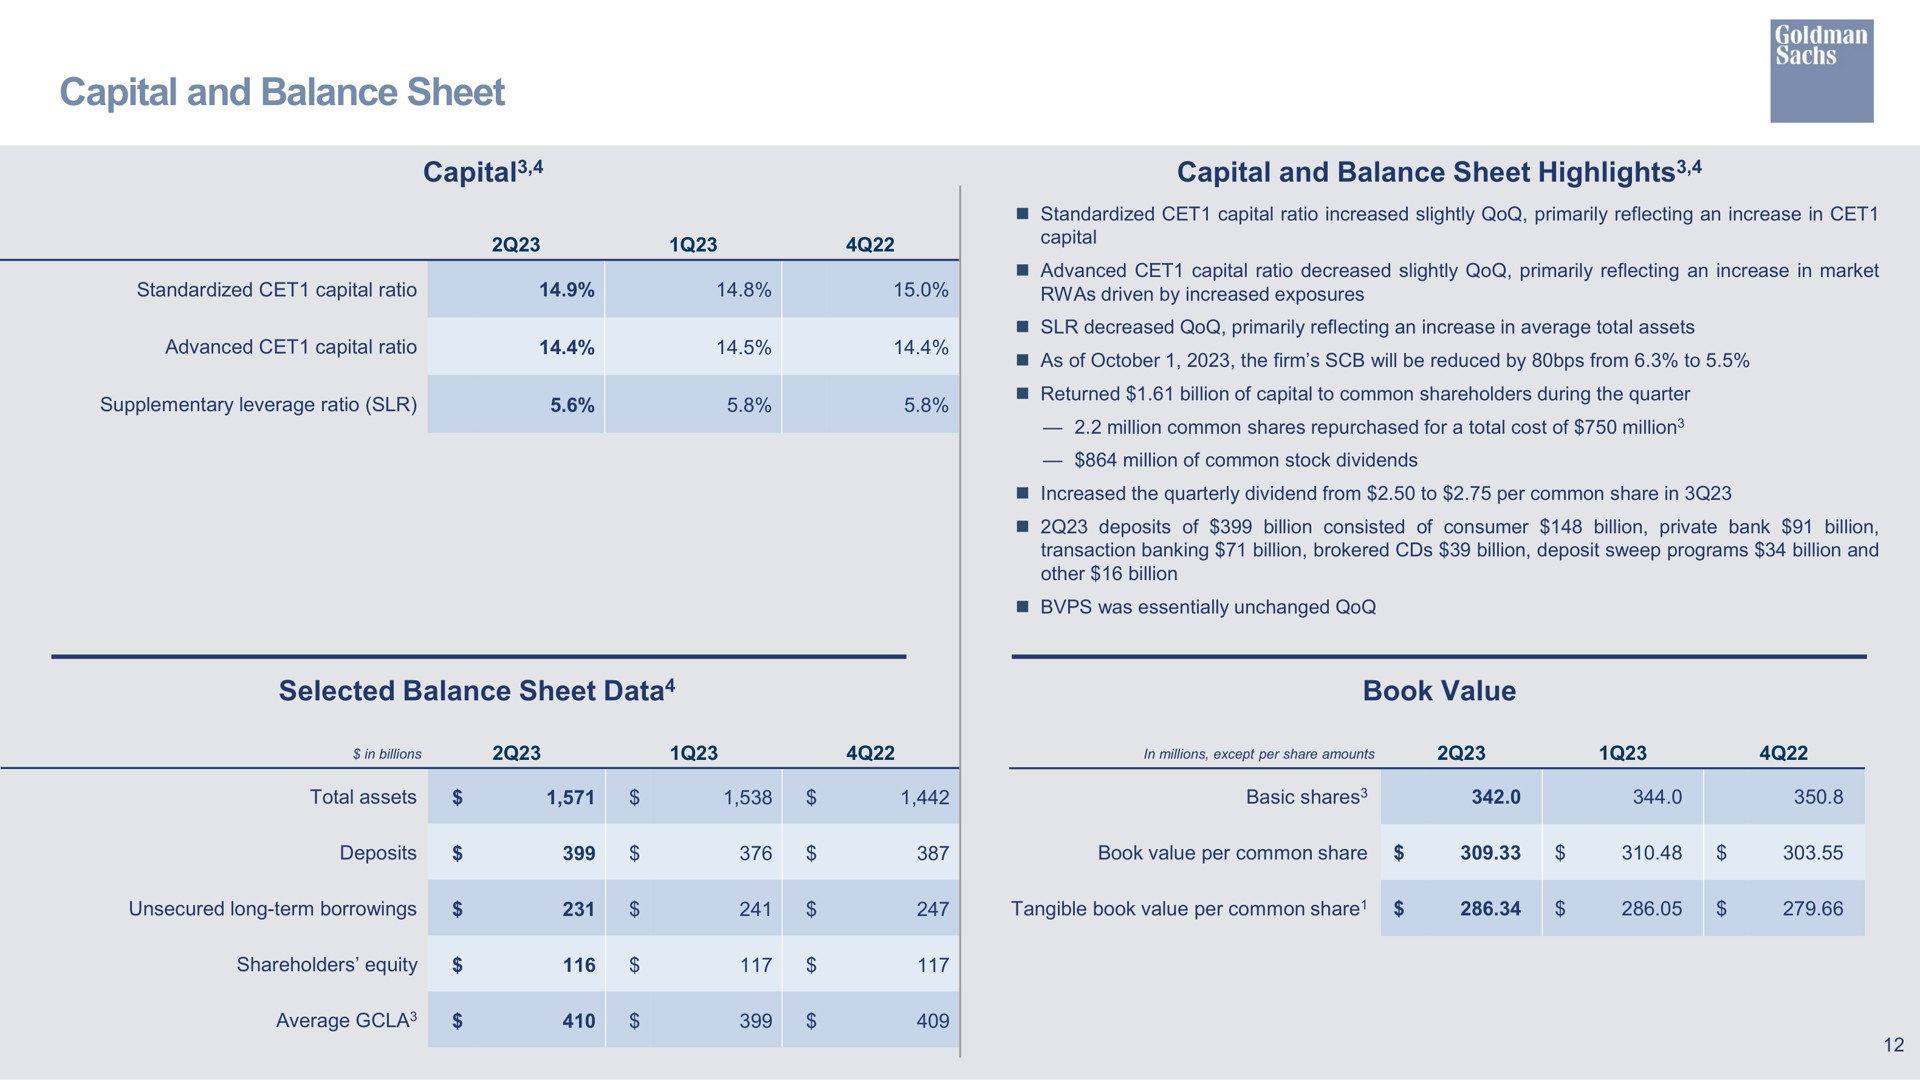 capital and balance sheet capital capital and balance sheet highlights selected balance sheet data book value highlights data | Goldman Sachs